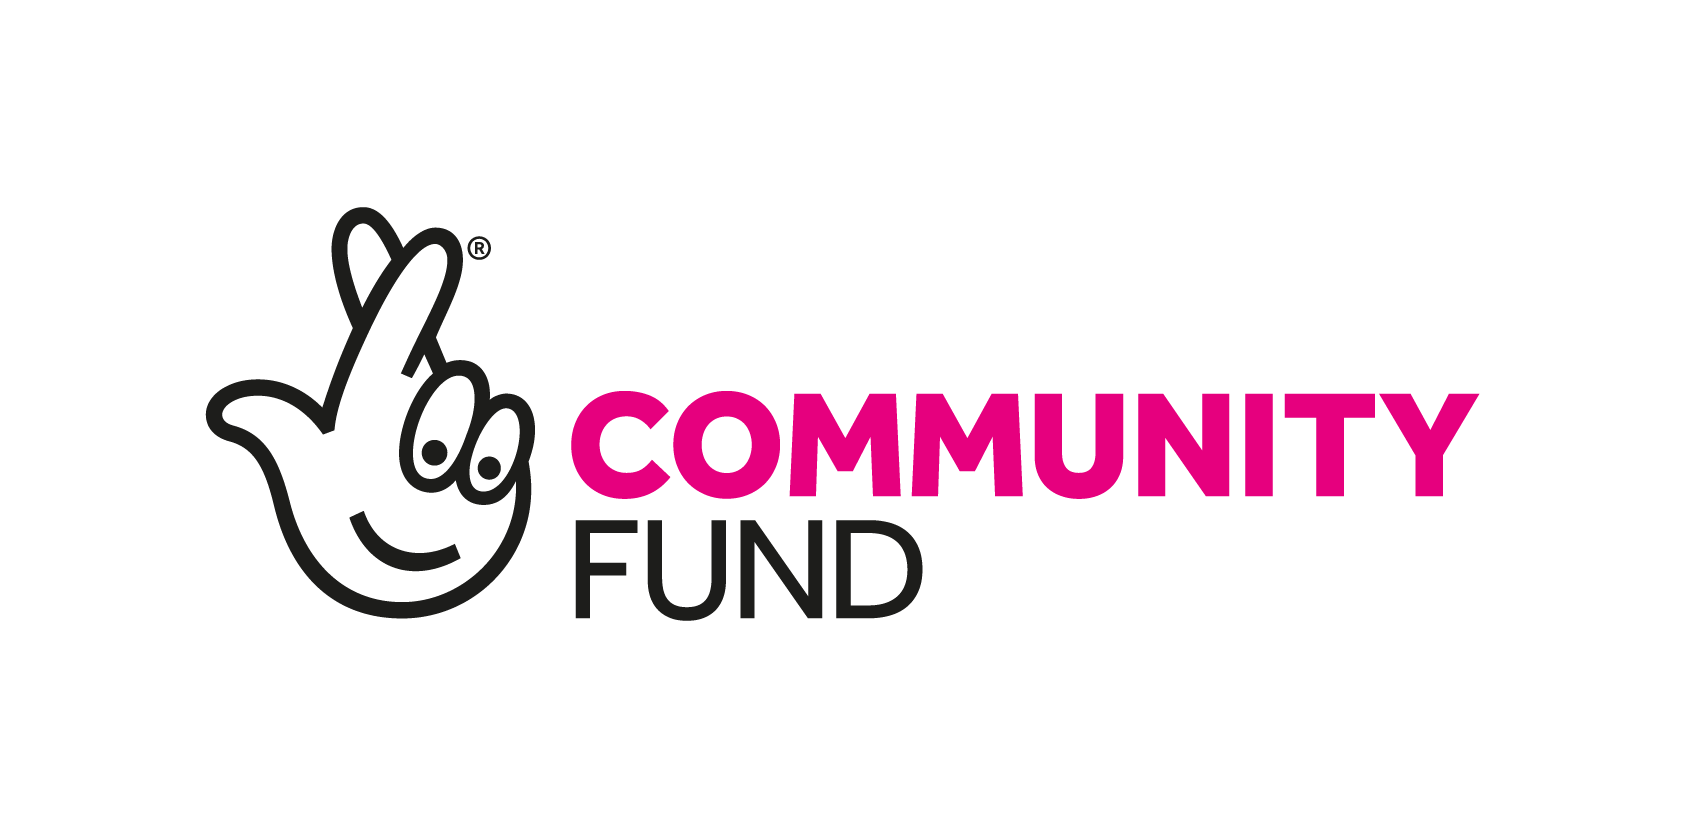 lottery fund community logo